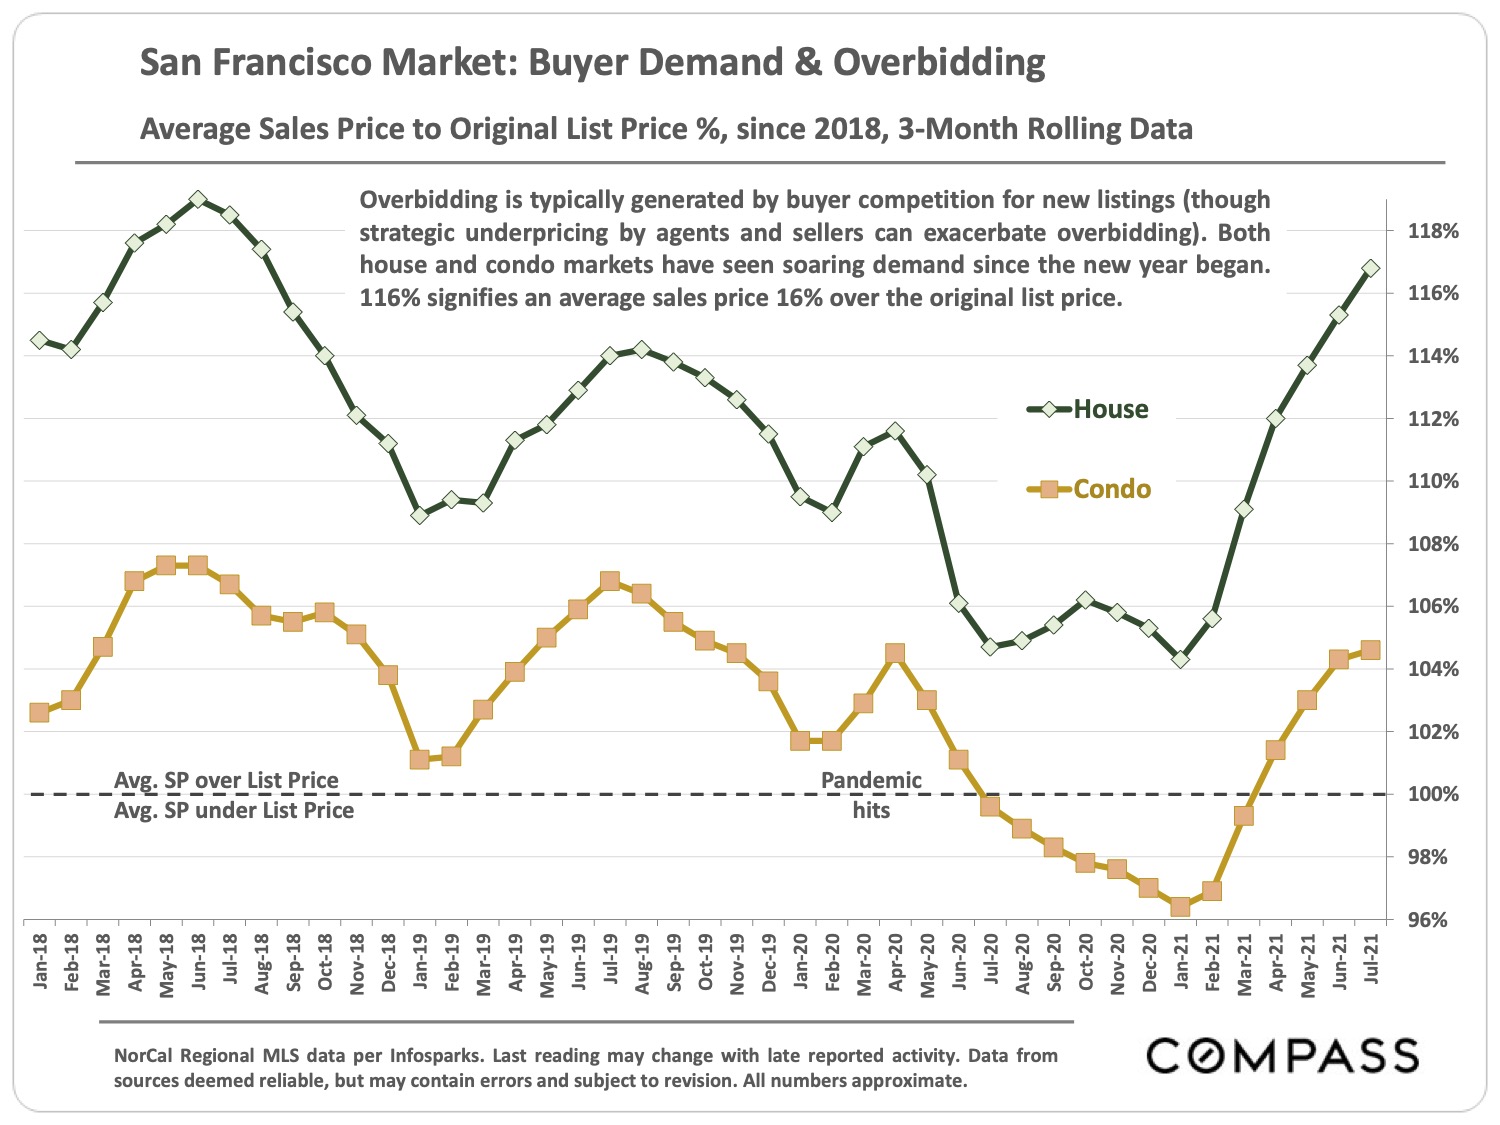 Image of San Francisco Market Buyer Demand & Overbidding Average Sales Price to Original List Price % since 2018 3 Month Rolling Data